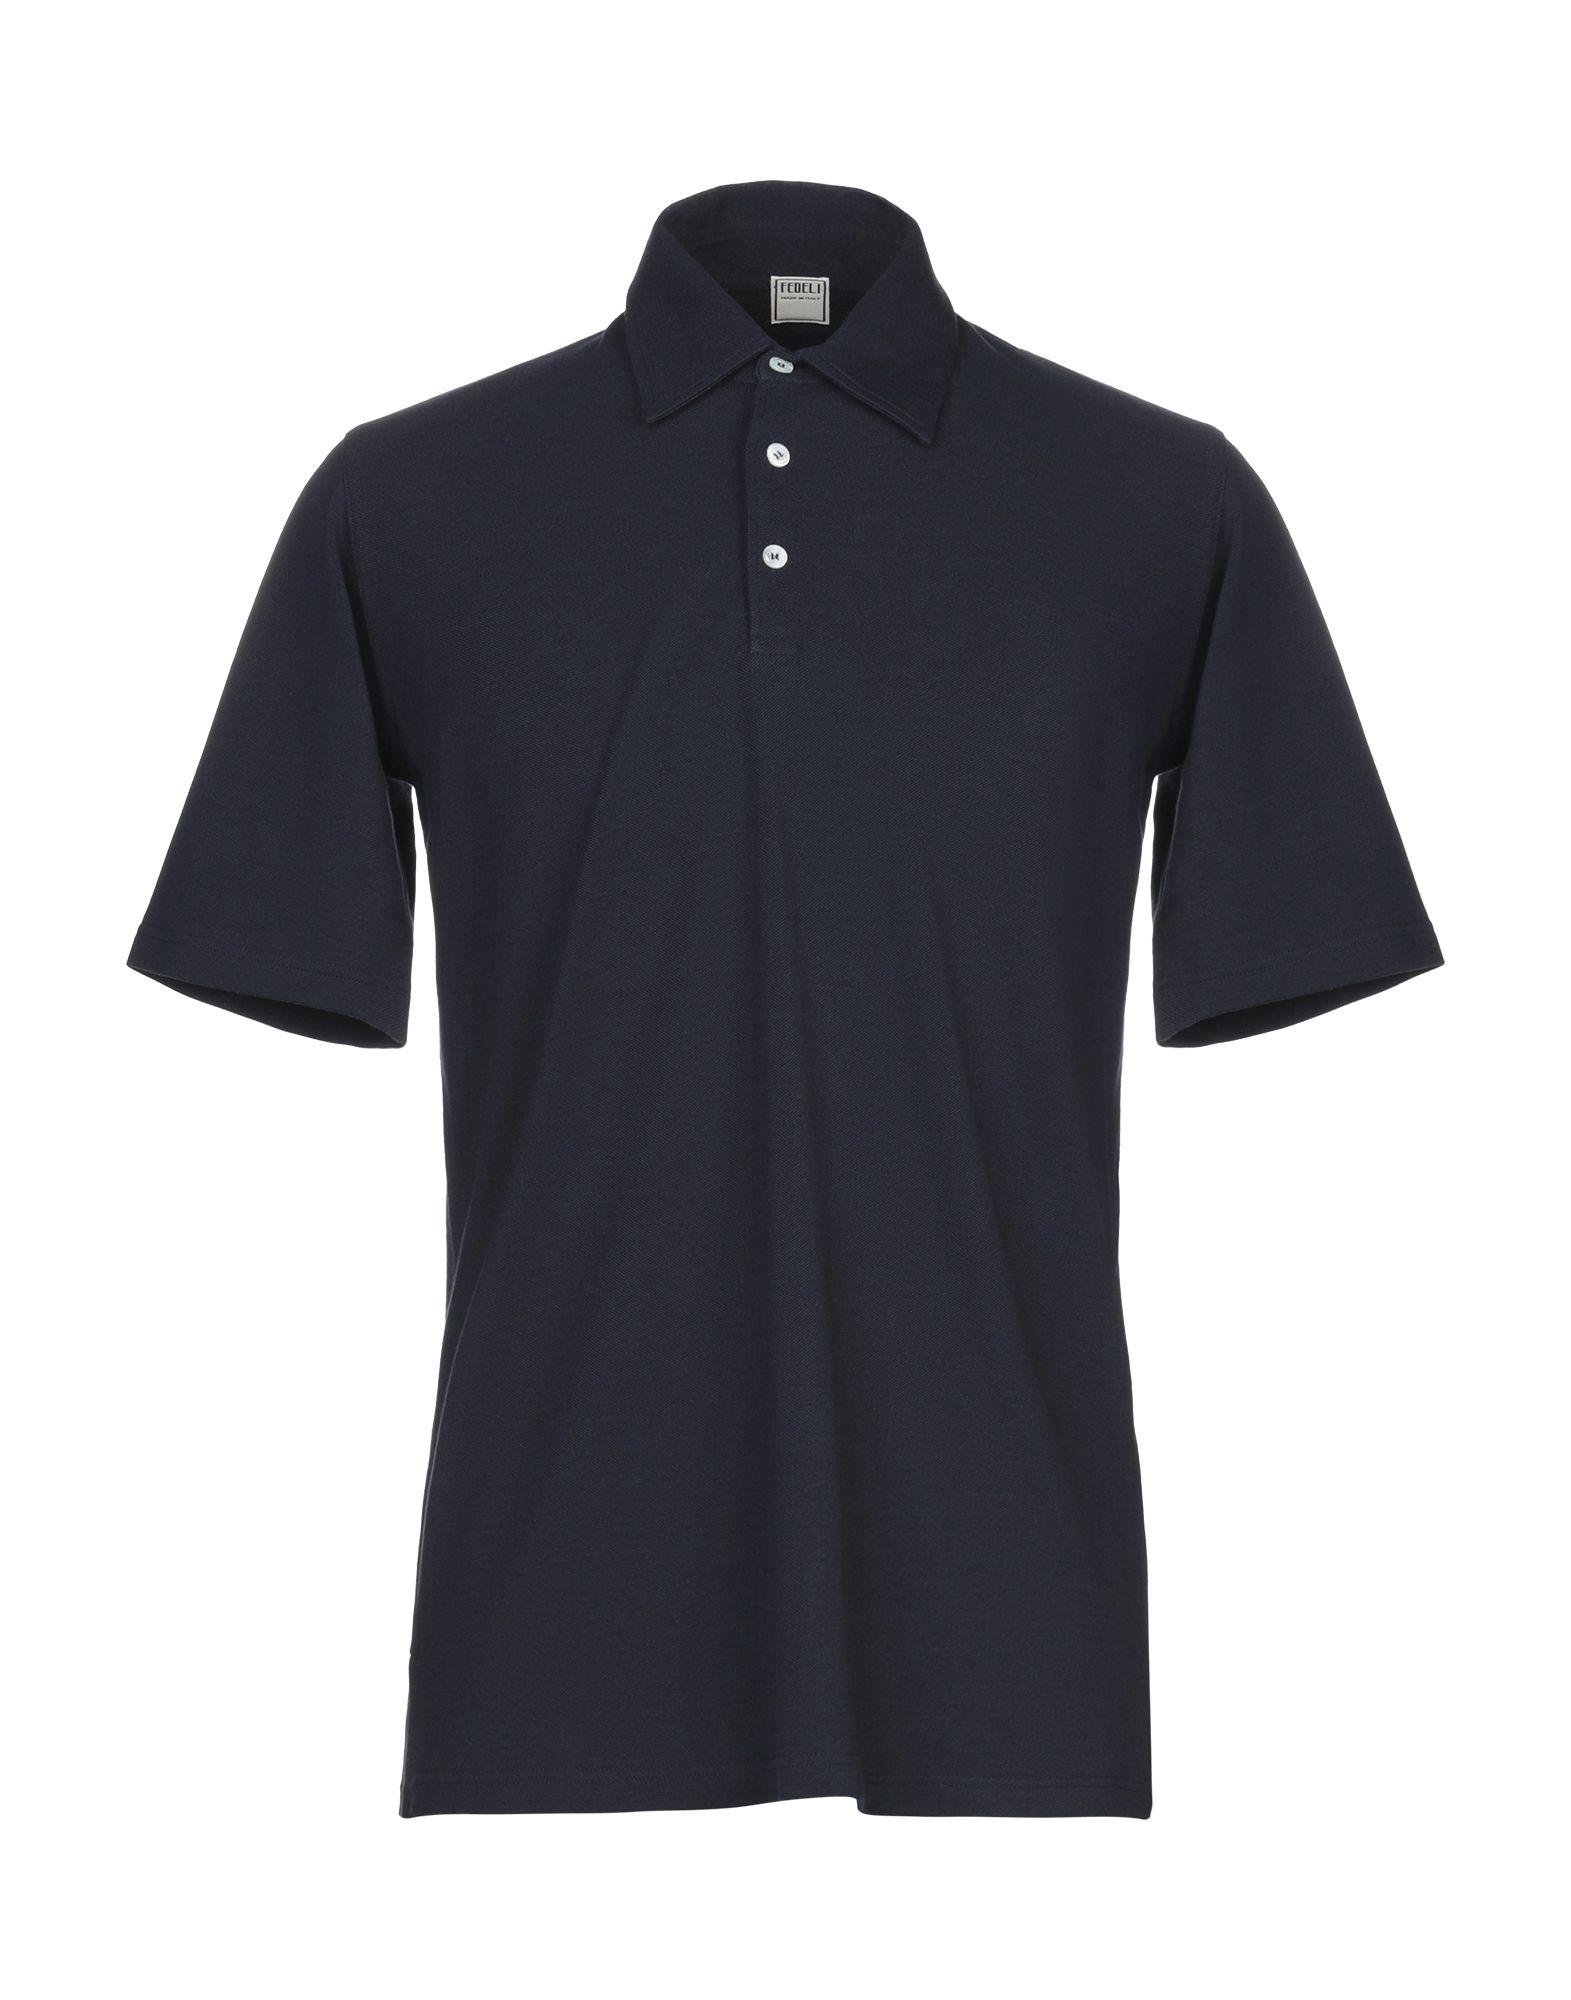 Fedeli Cotton Polo Shirt in Dark Blue (Blue) for Men - Lyst